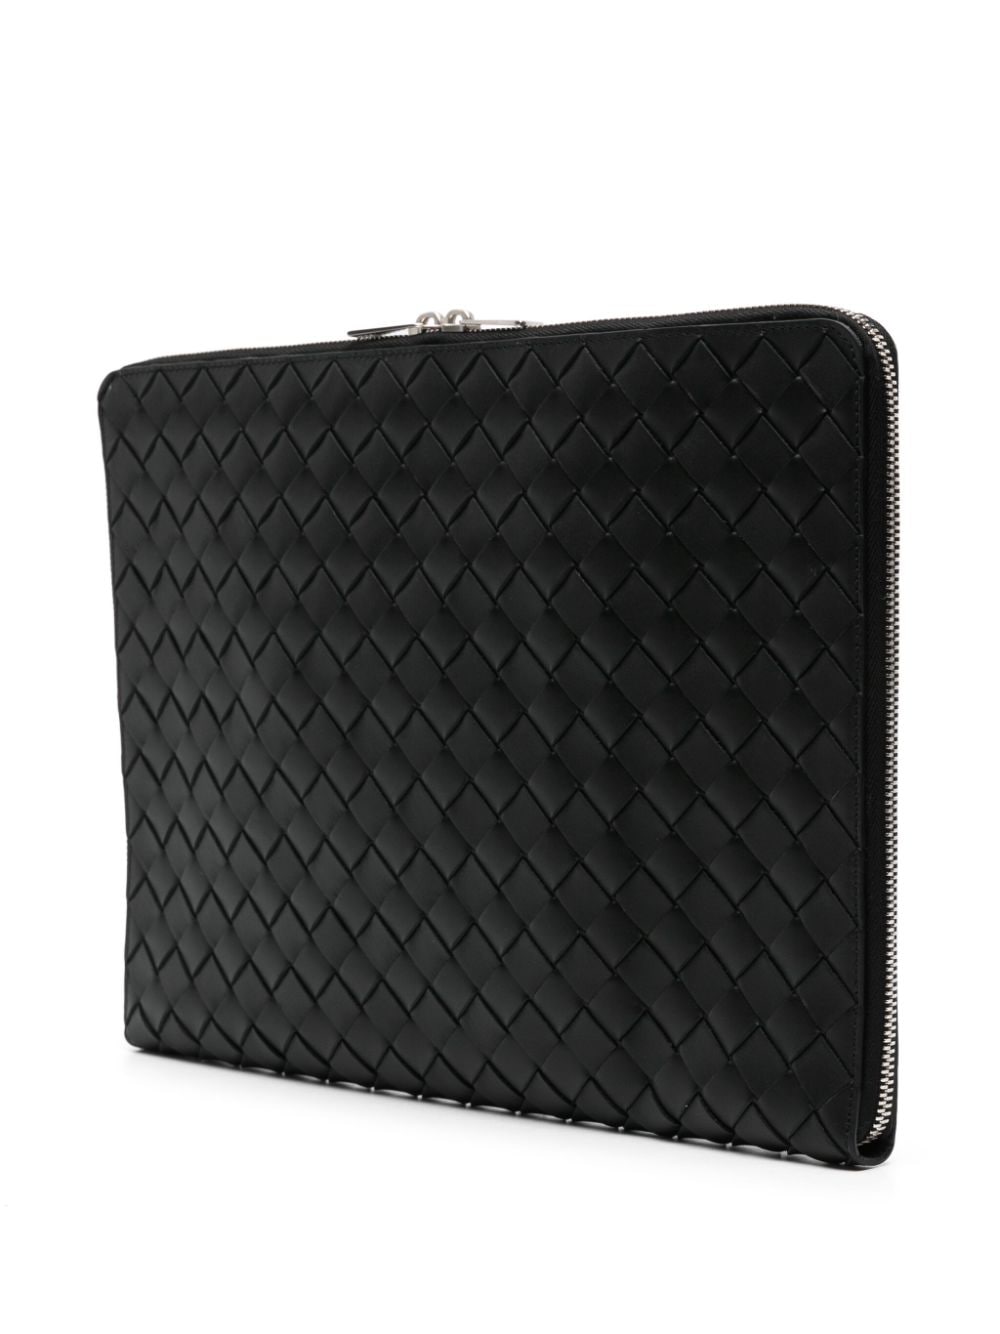 Bottega Veneta Intrecciato leather laptop bag - Zwart